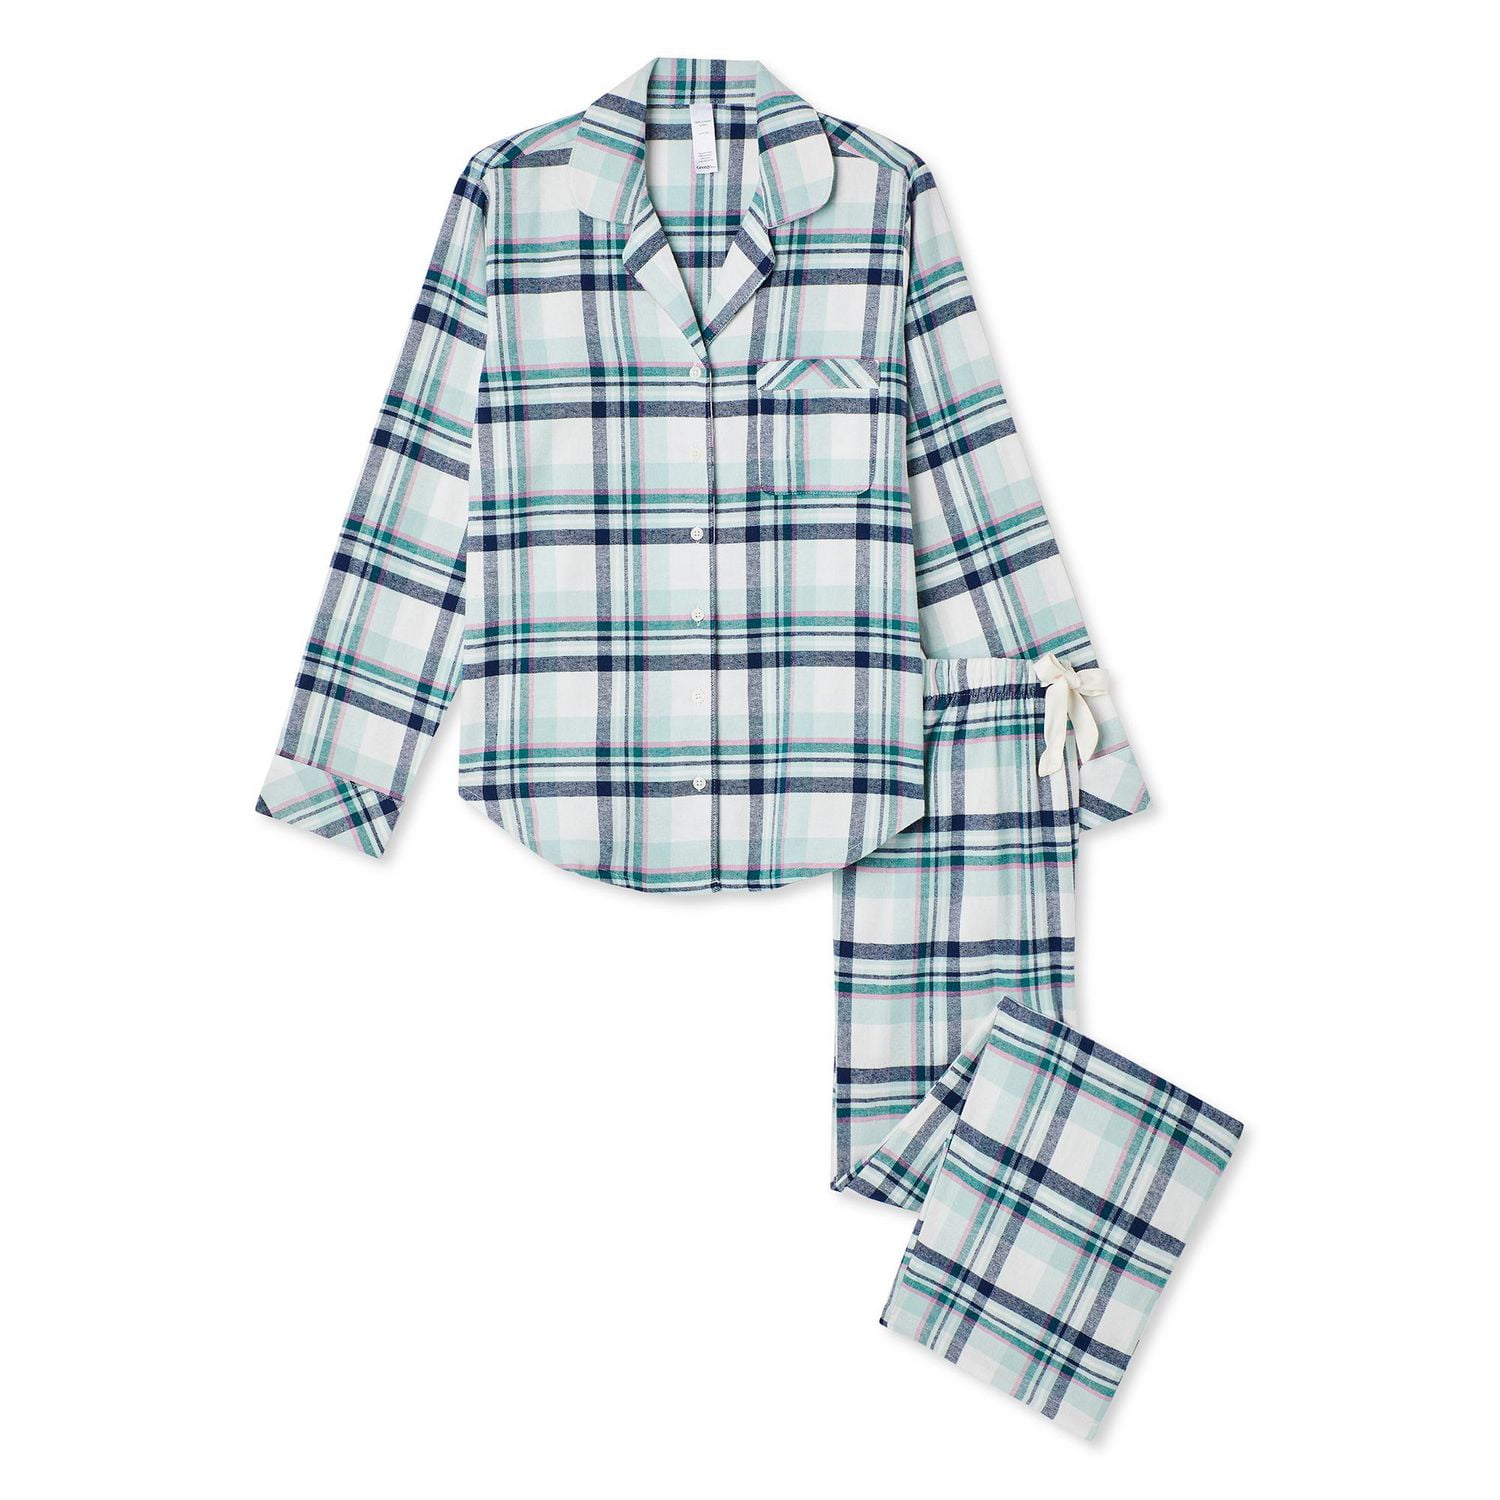 George Women's Flannel Pajamas 2-Piece Set 